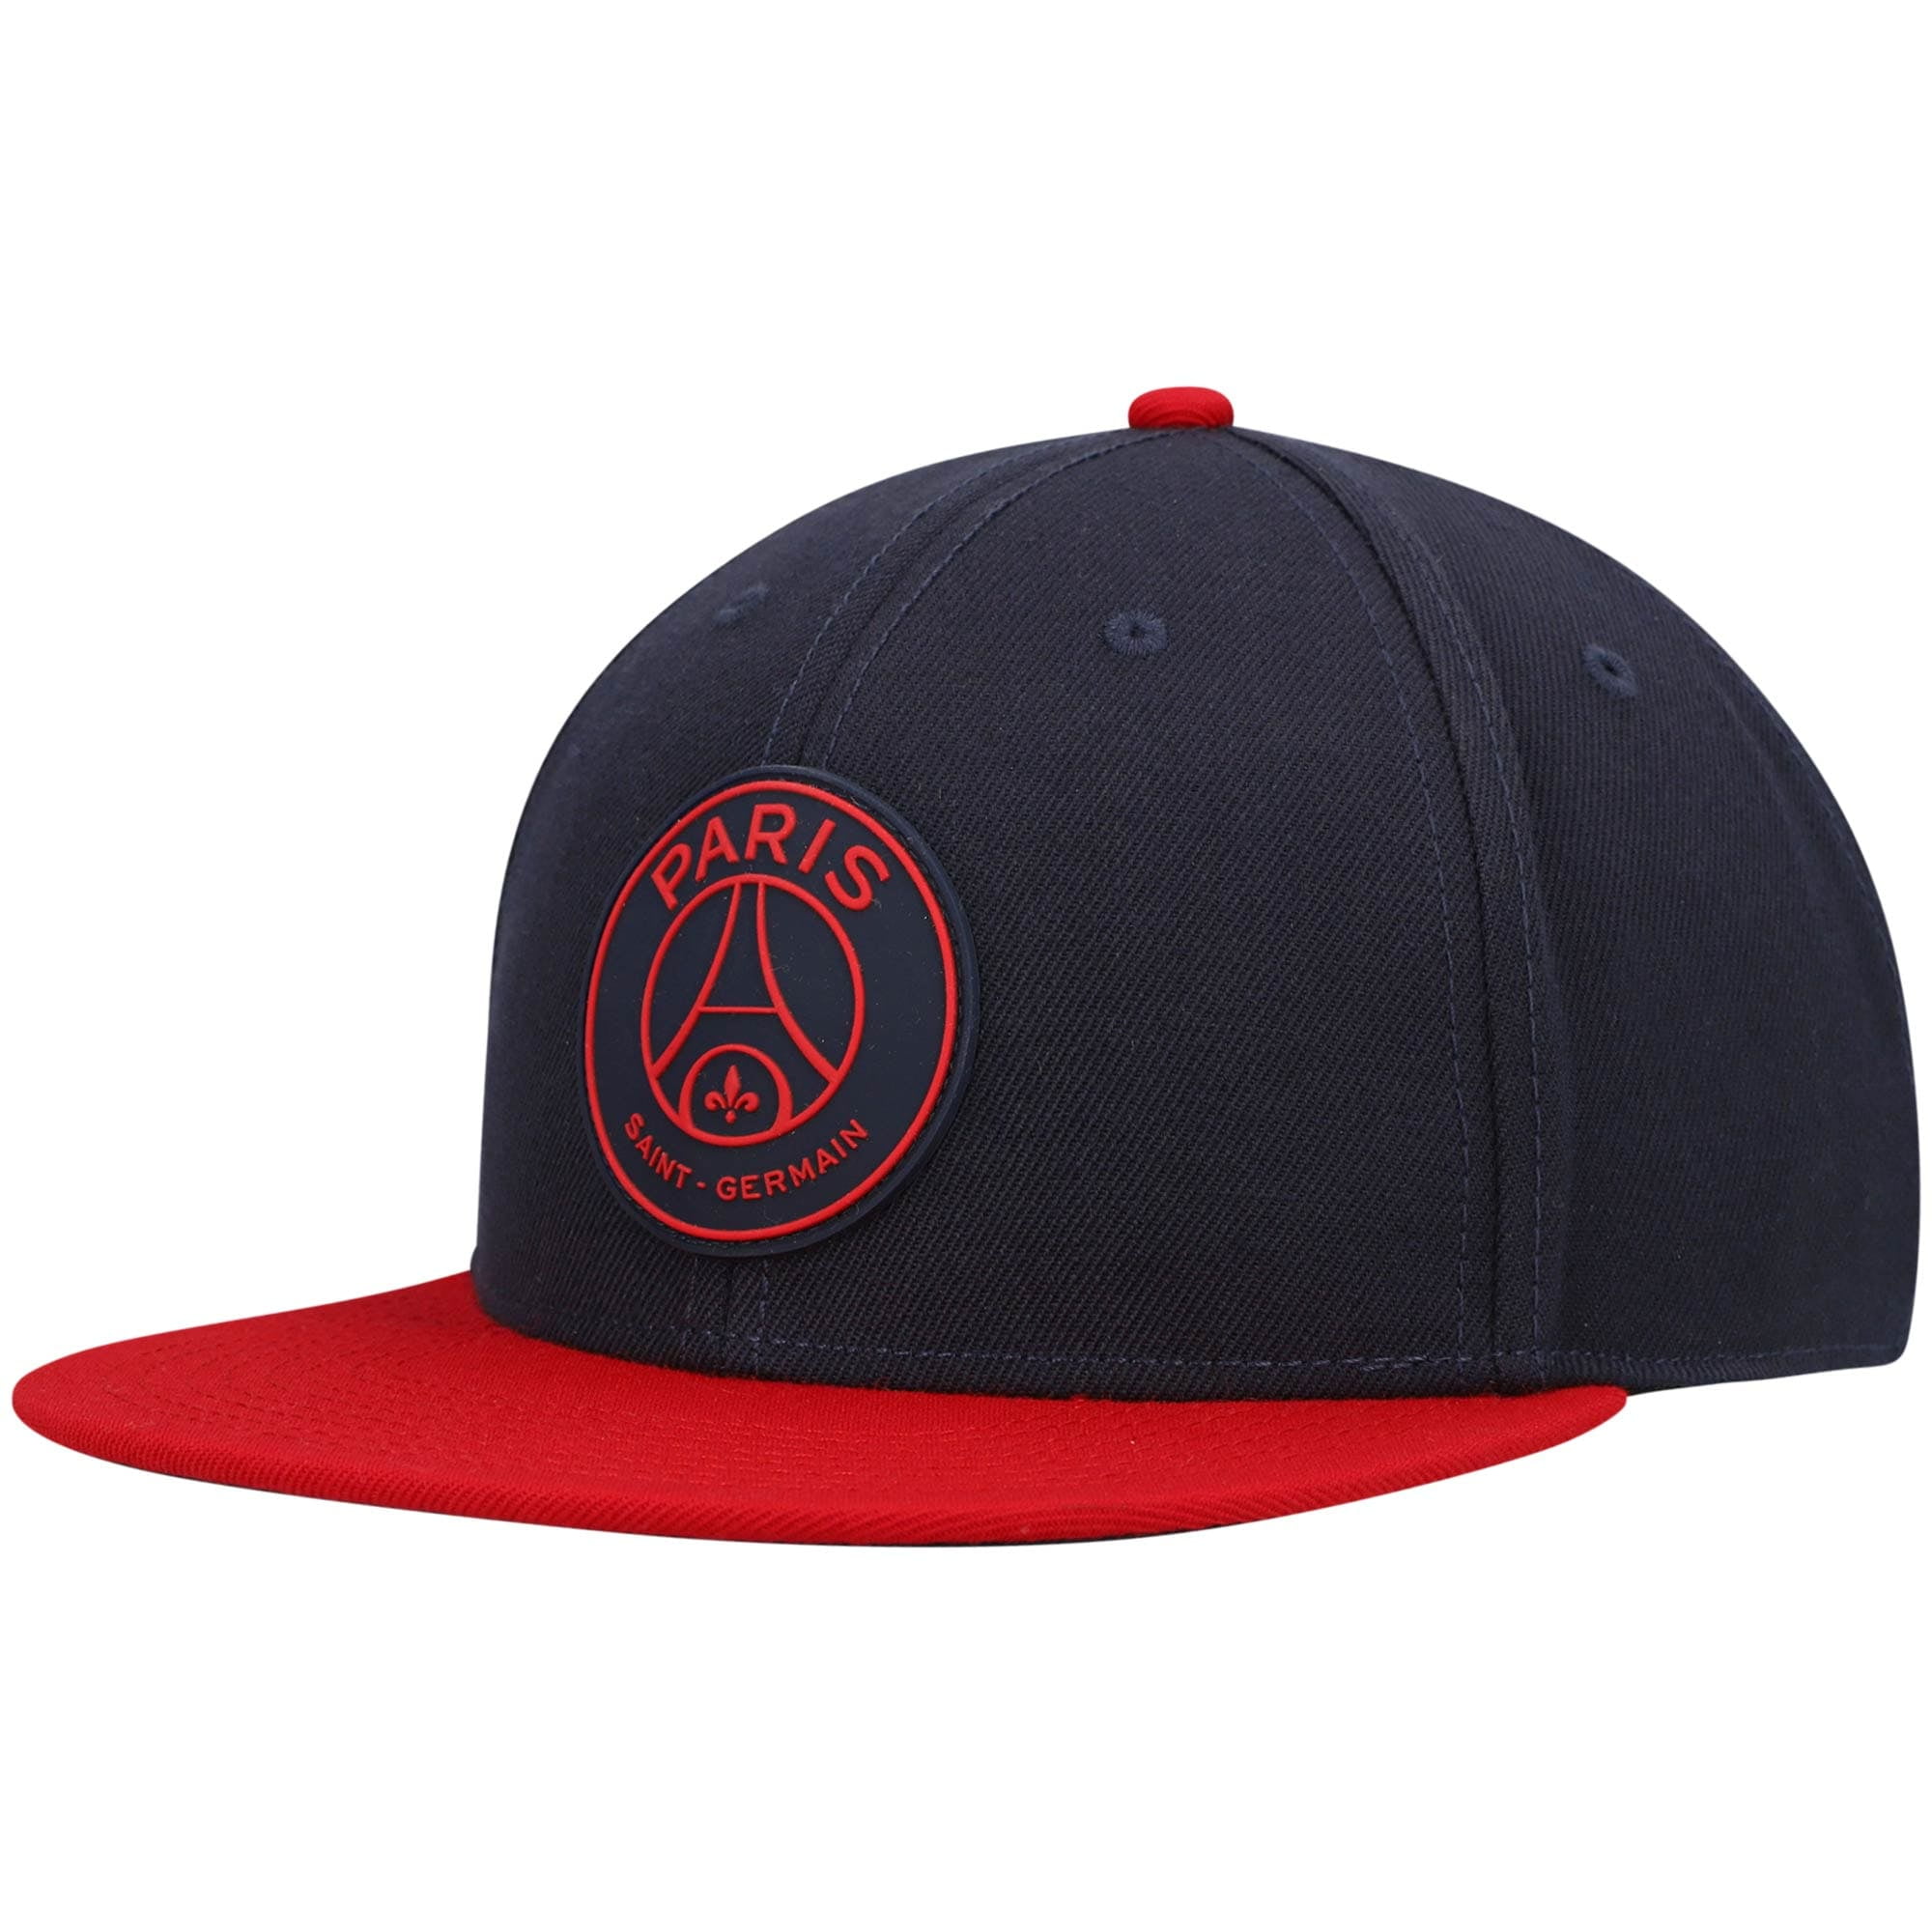 RED Official PSG Idea Gift Adult Paris Saint-Germain Baseball Cap 